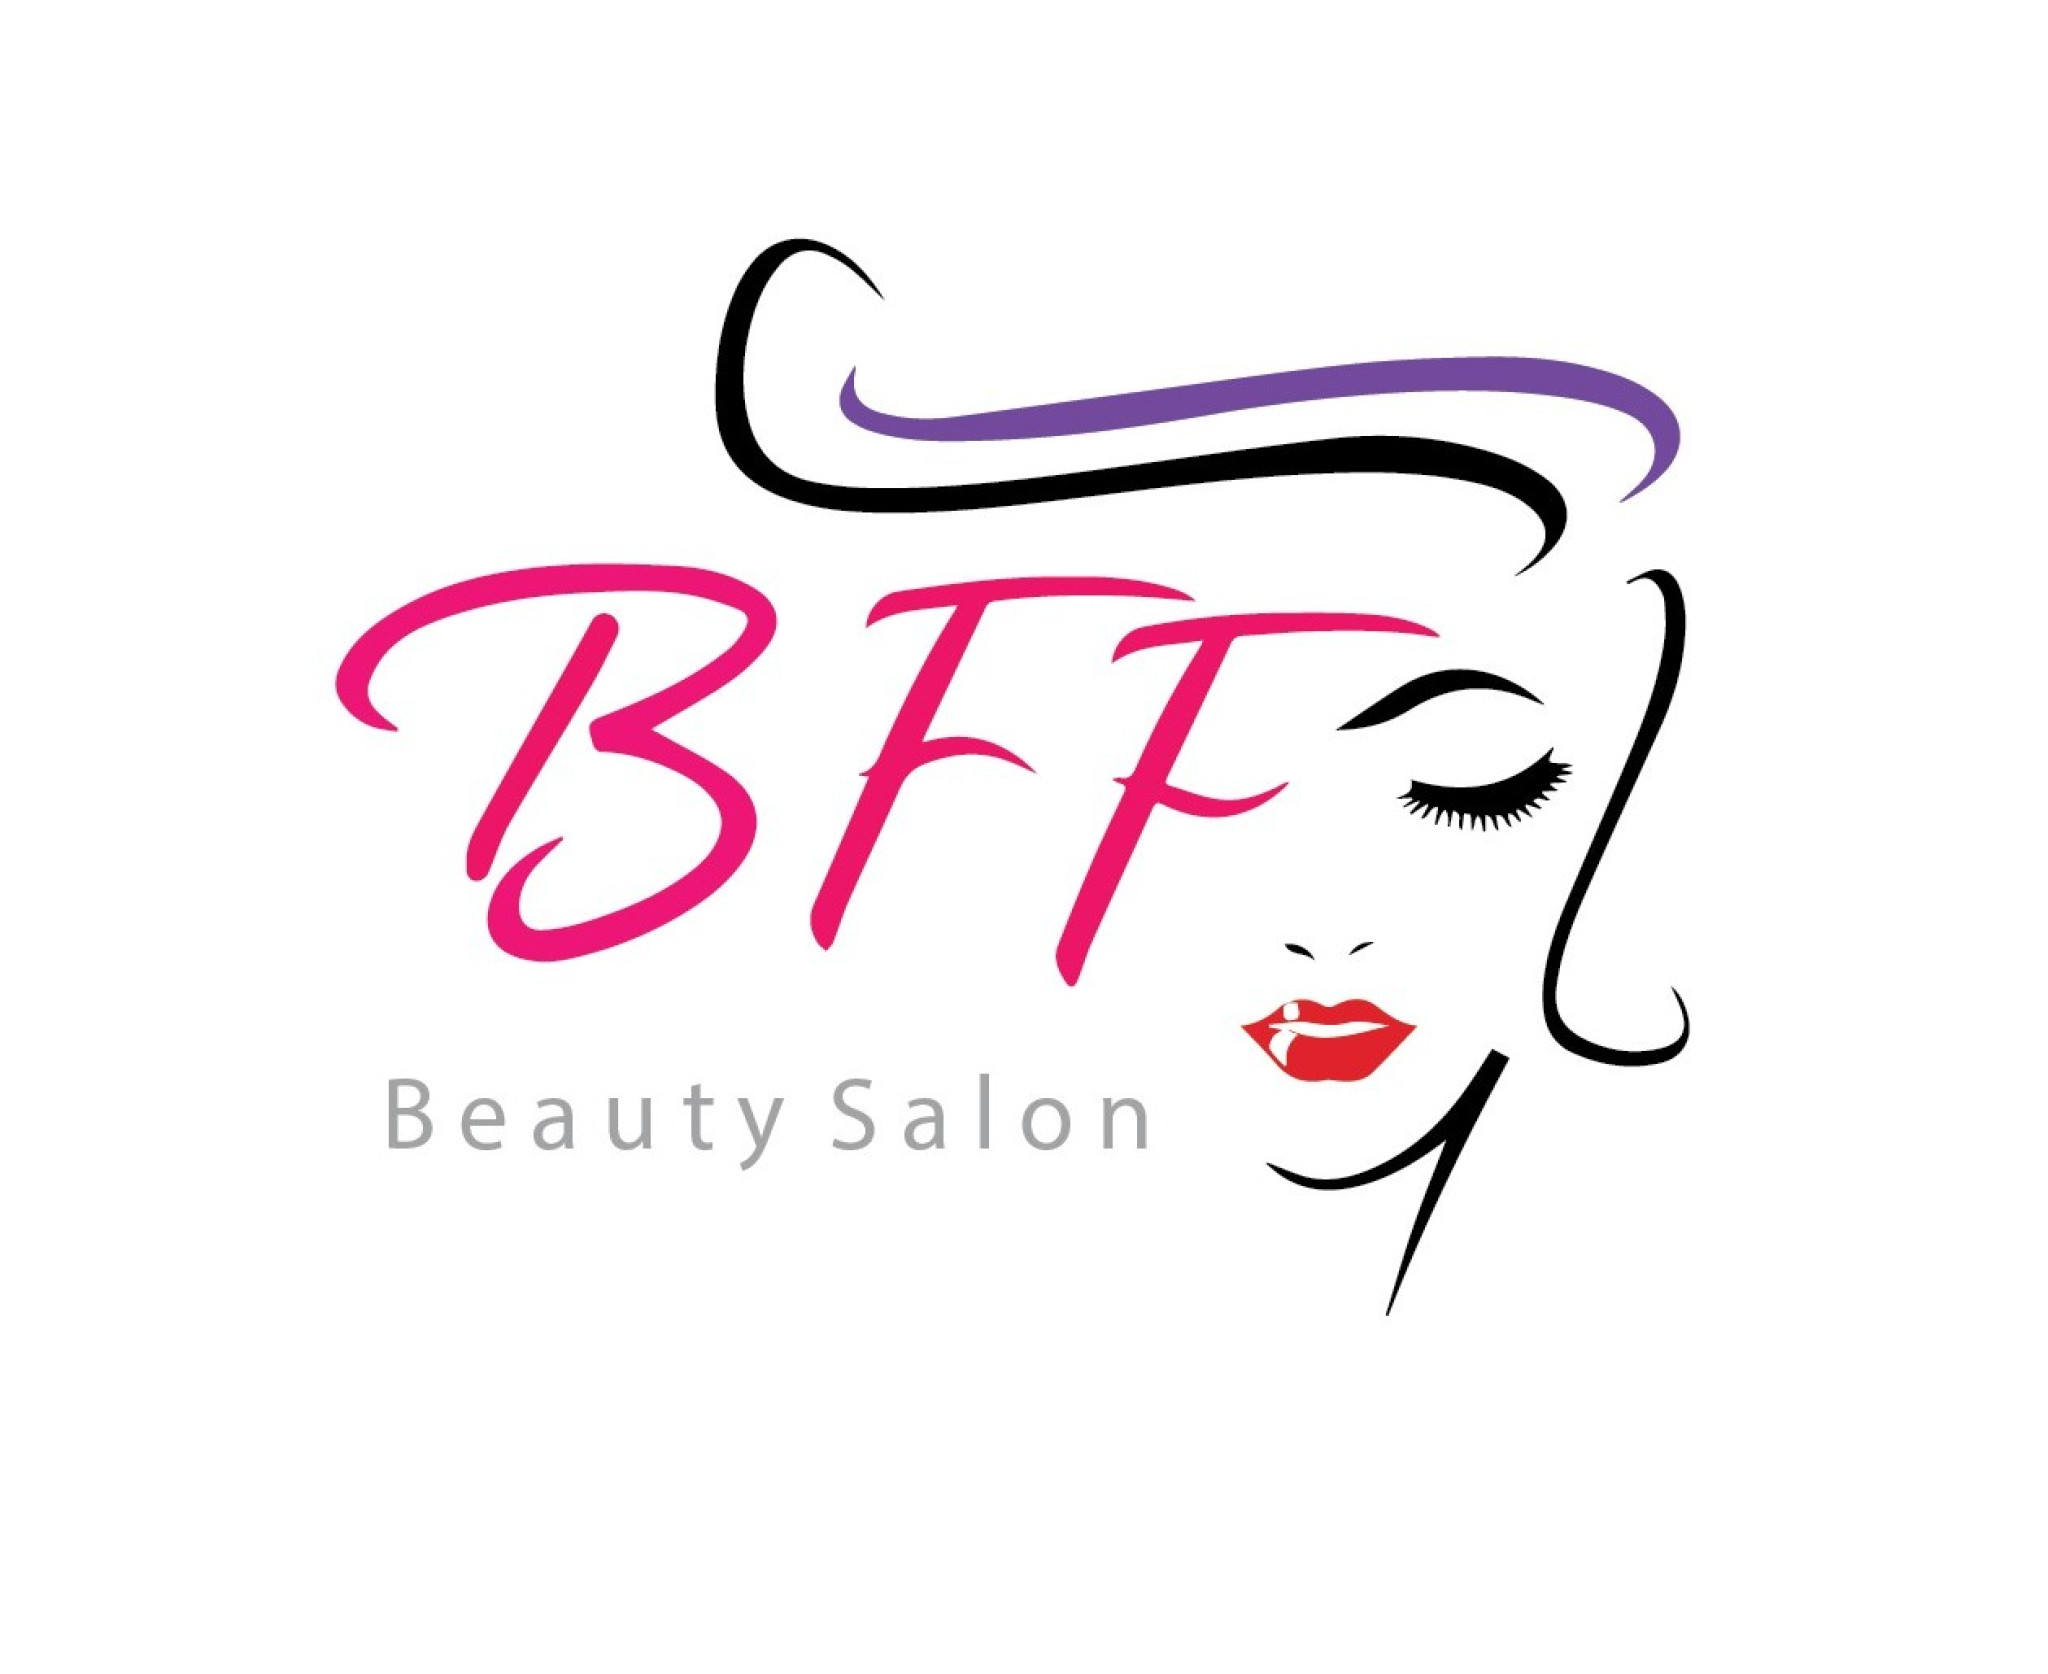 BFF Beauty Salon